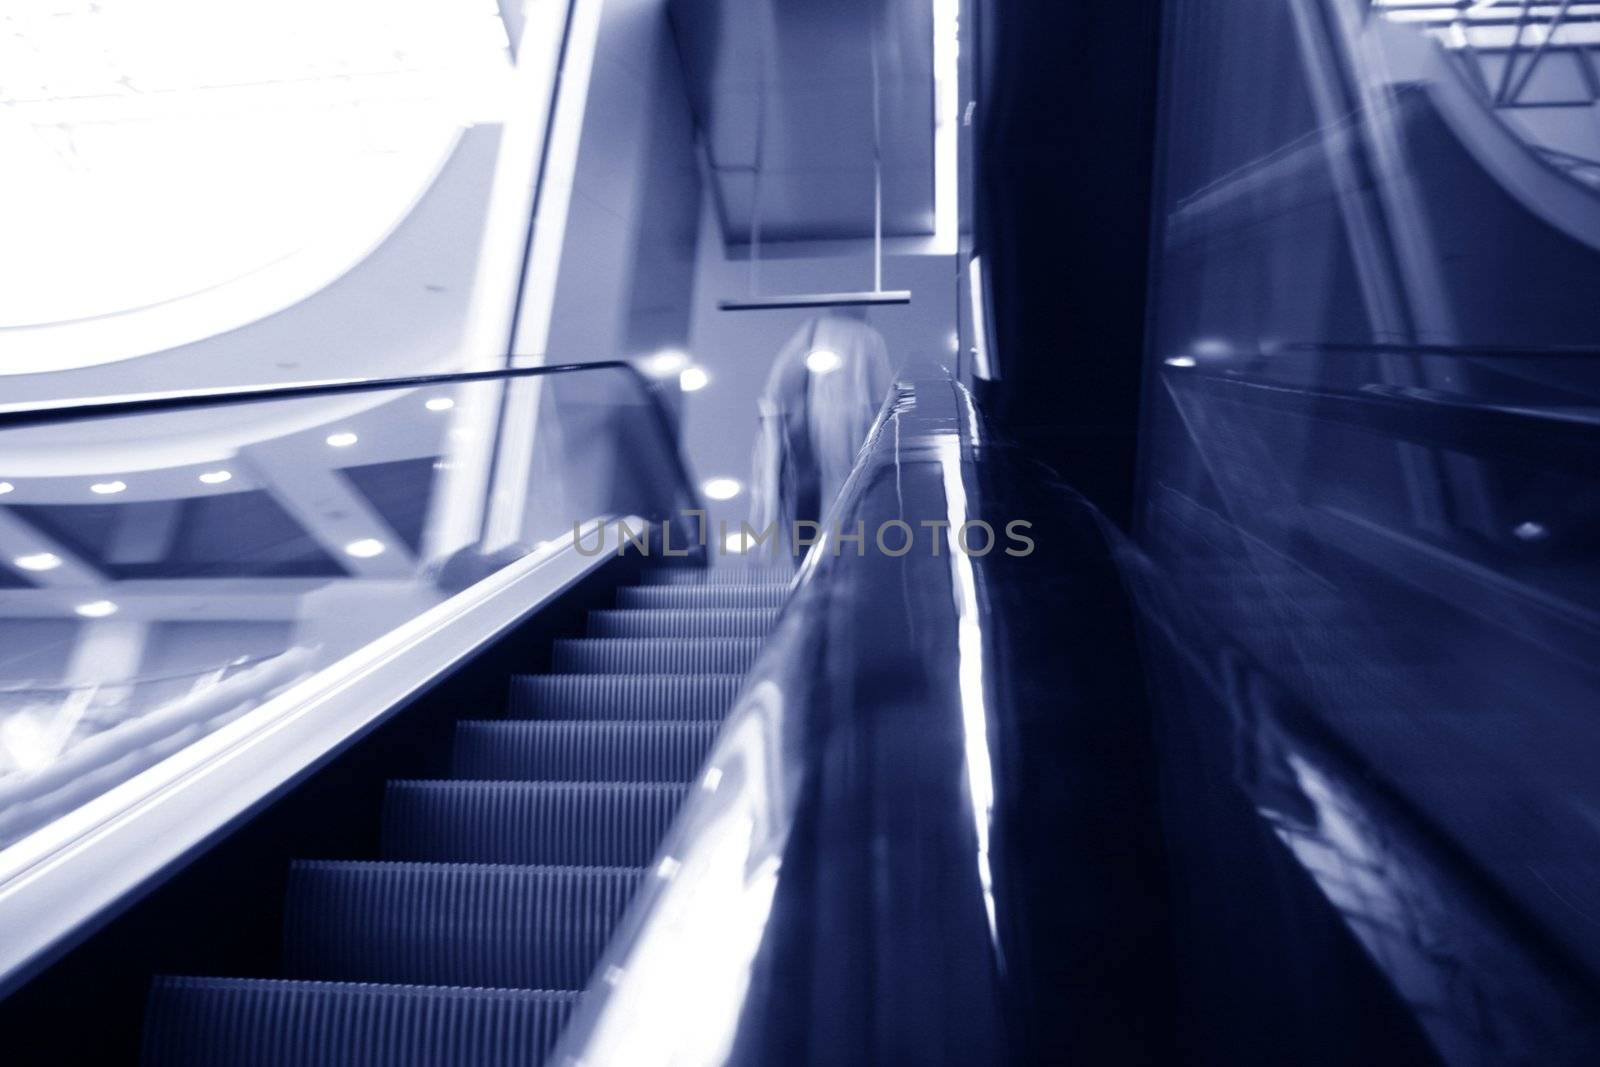 blurred escalator by Yellowj